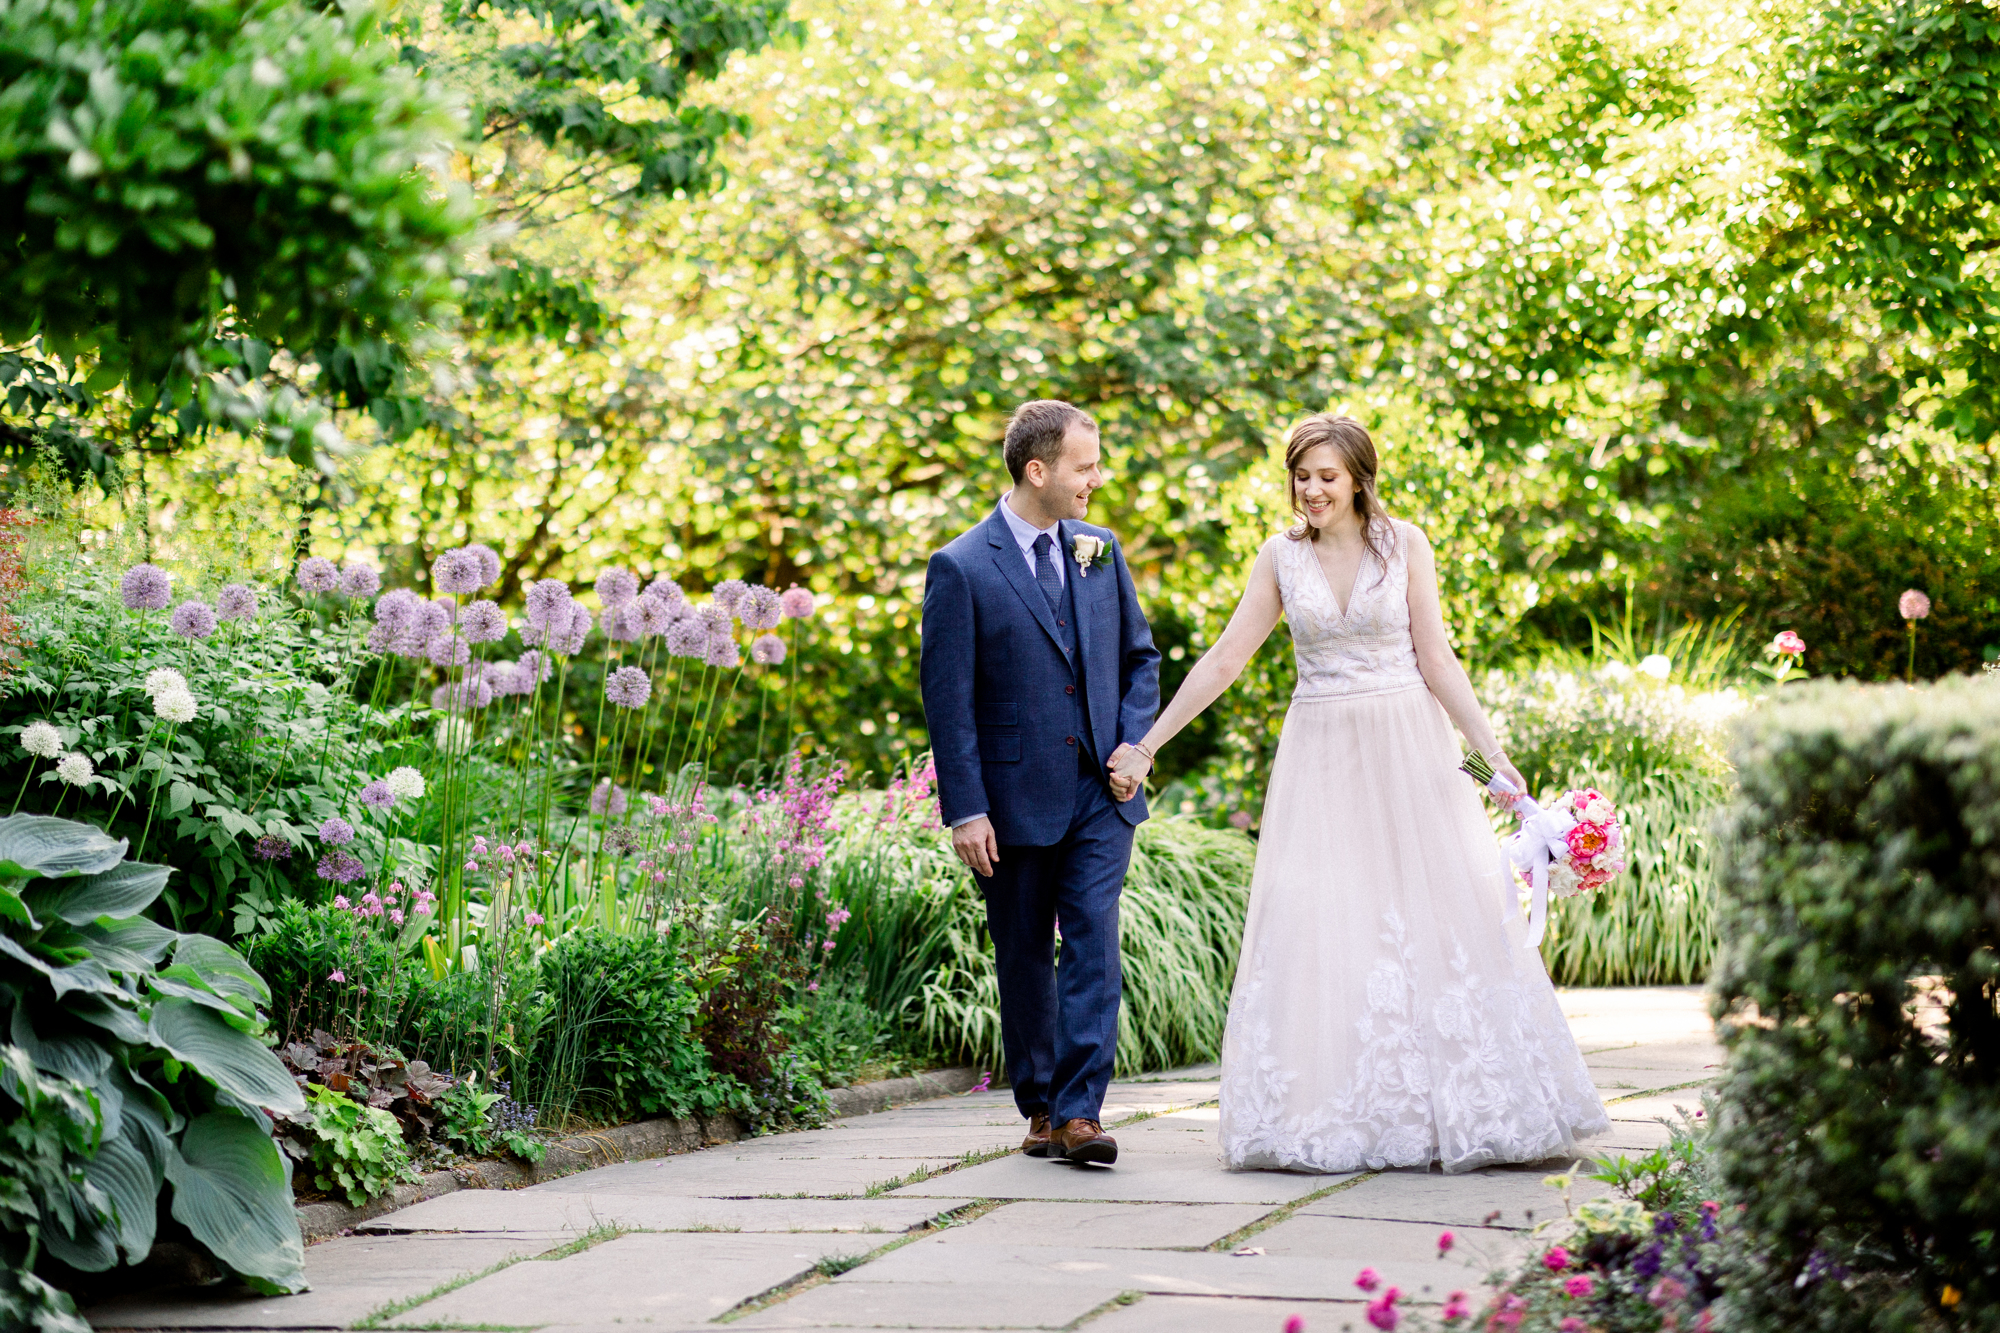 Wonderful Summer Wedding Photos at the Conservatory Garden in Central Park New York